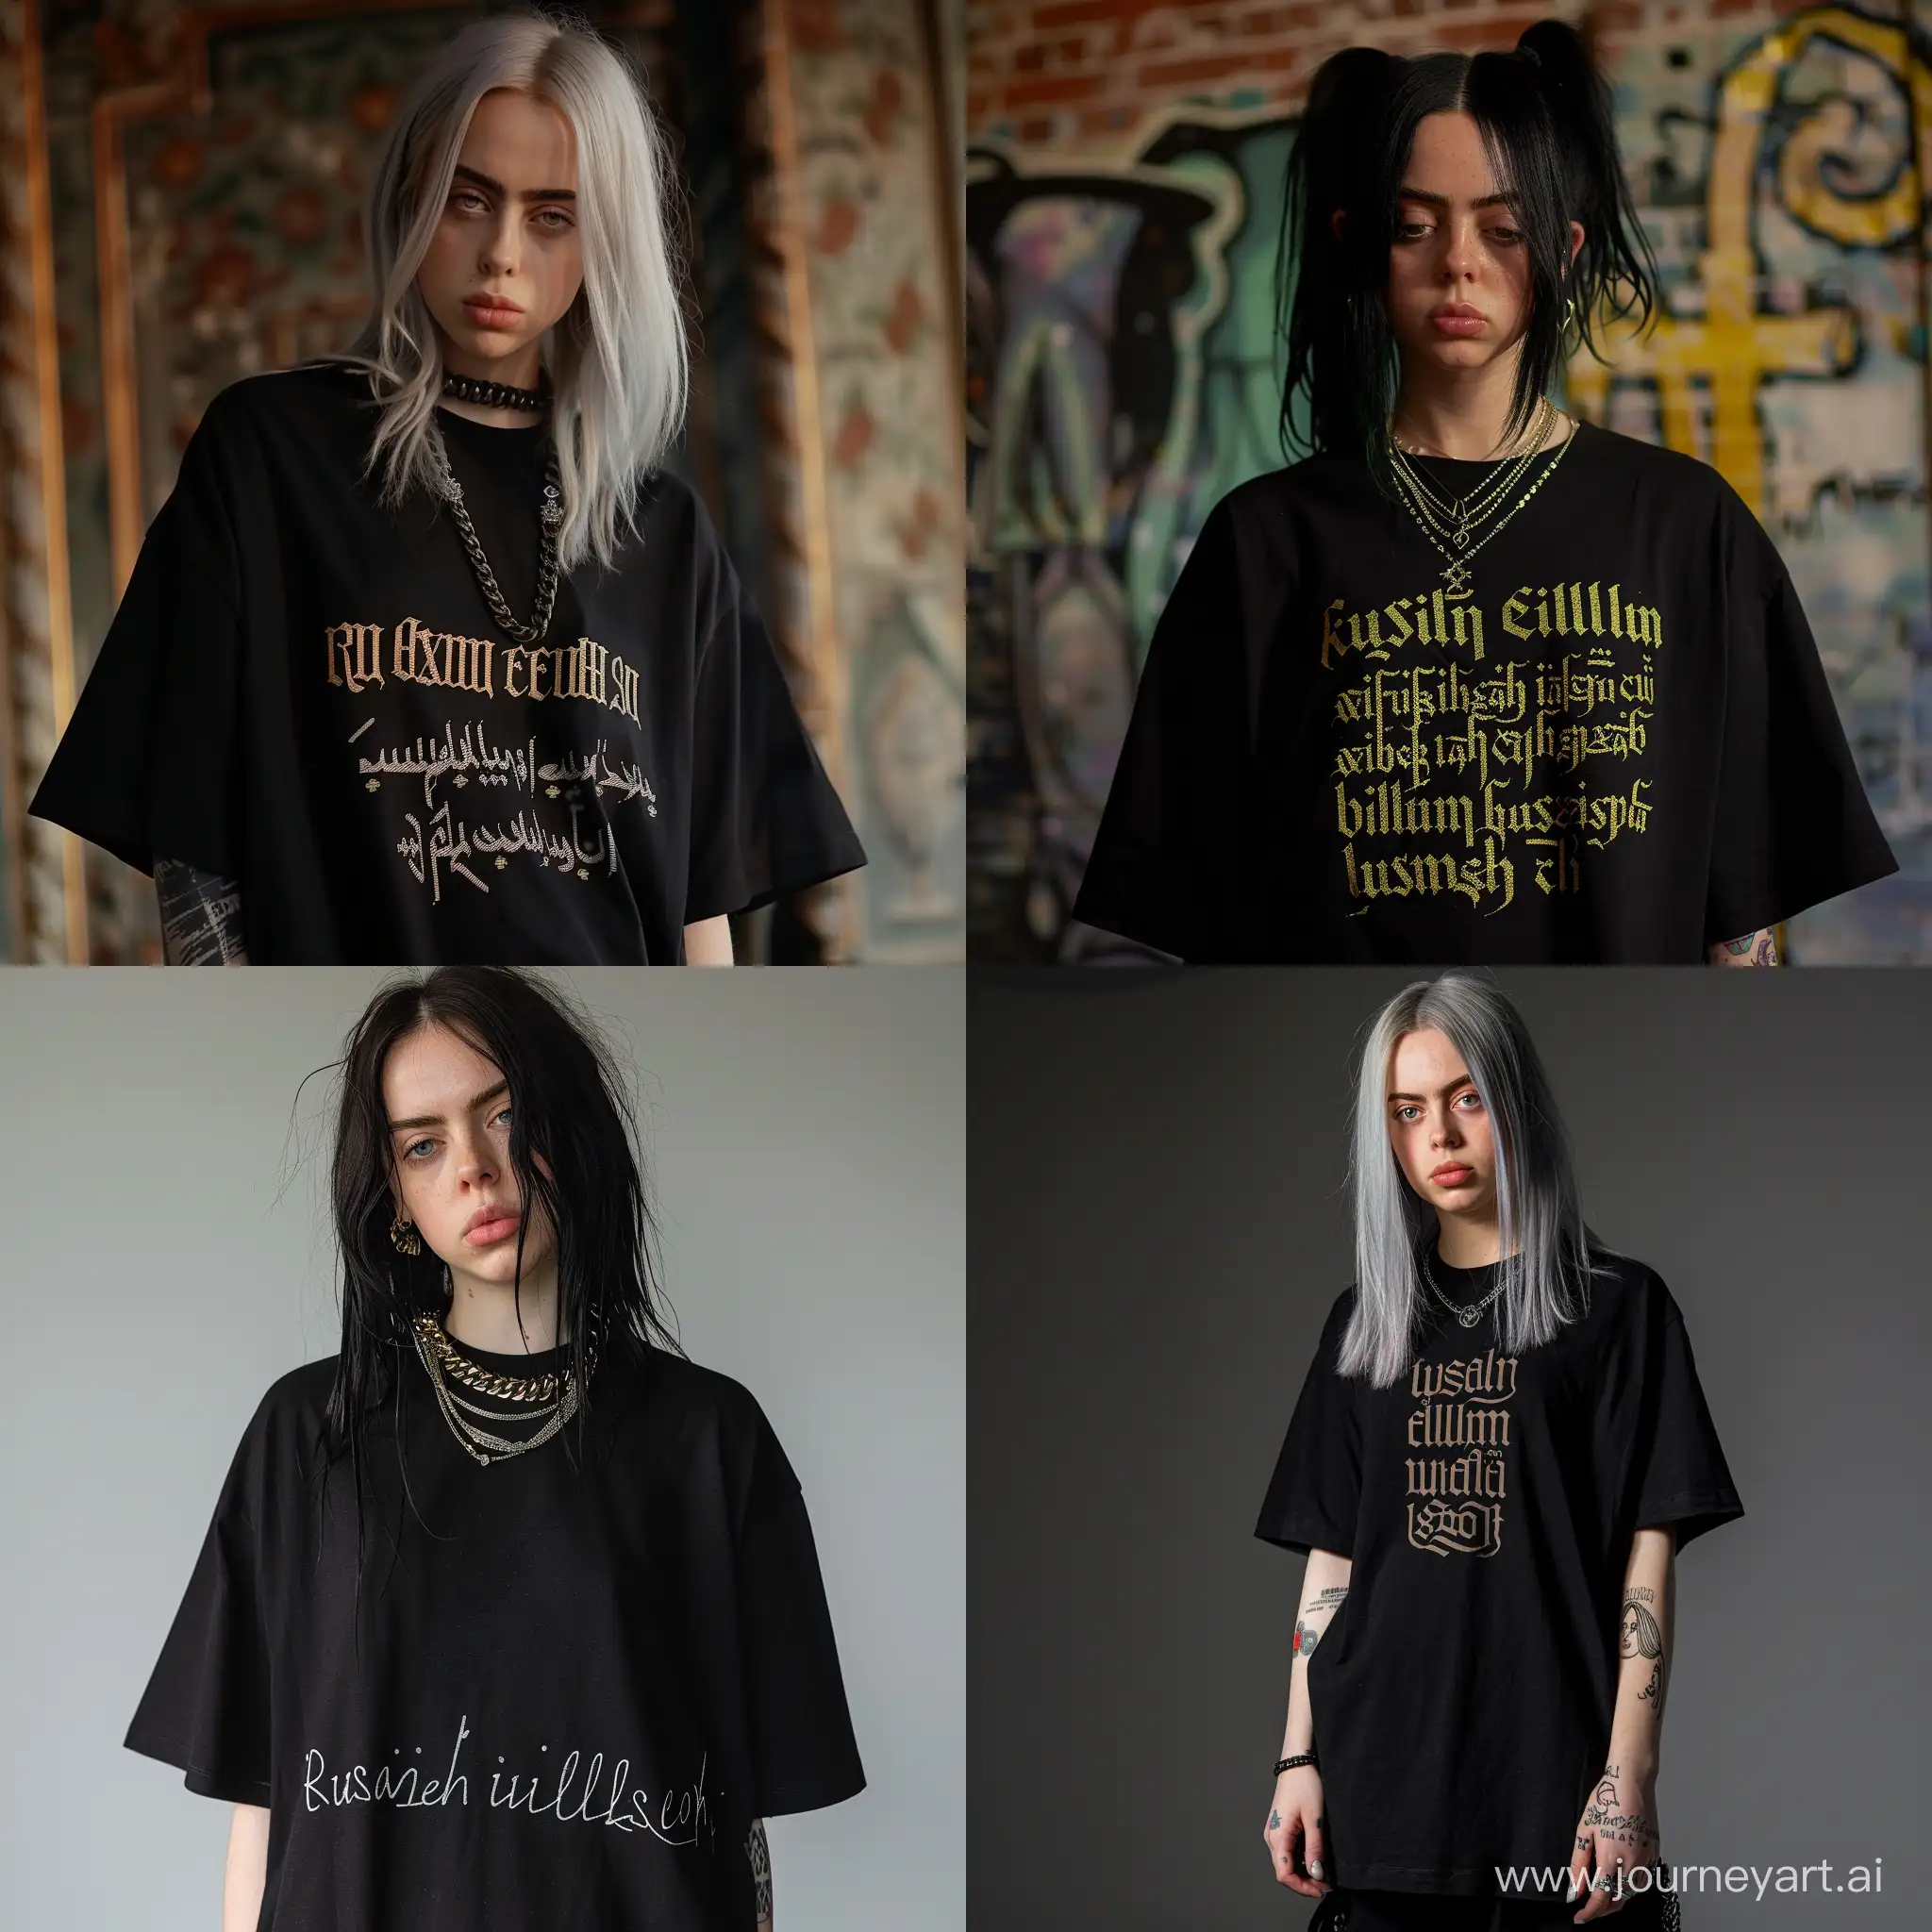 Billie-Eilish-Wearing-Black-TShirt-with-Unique-Inscription